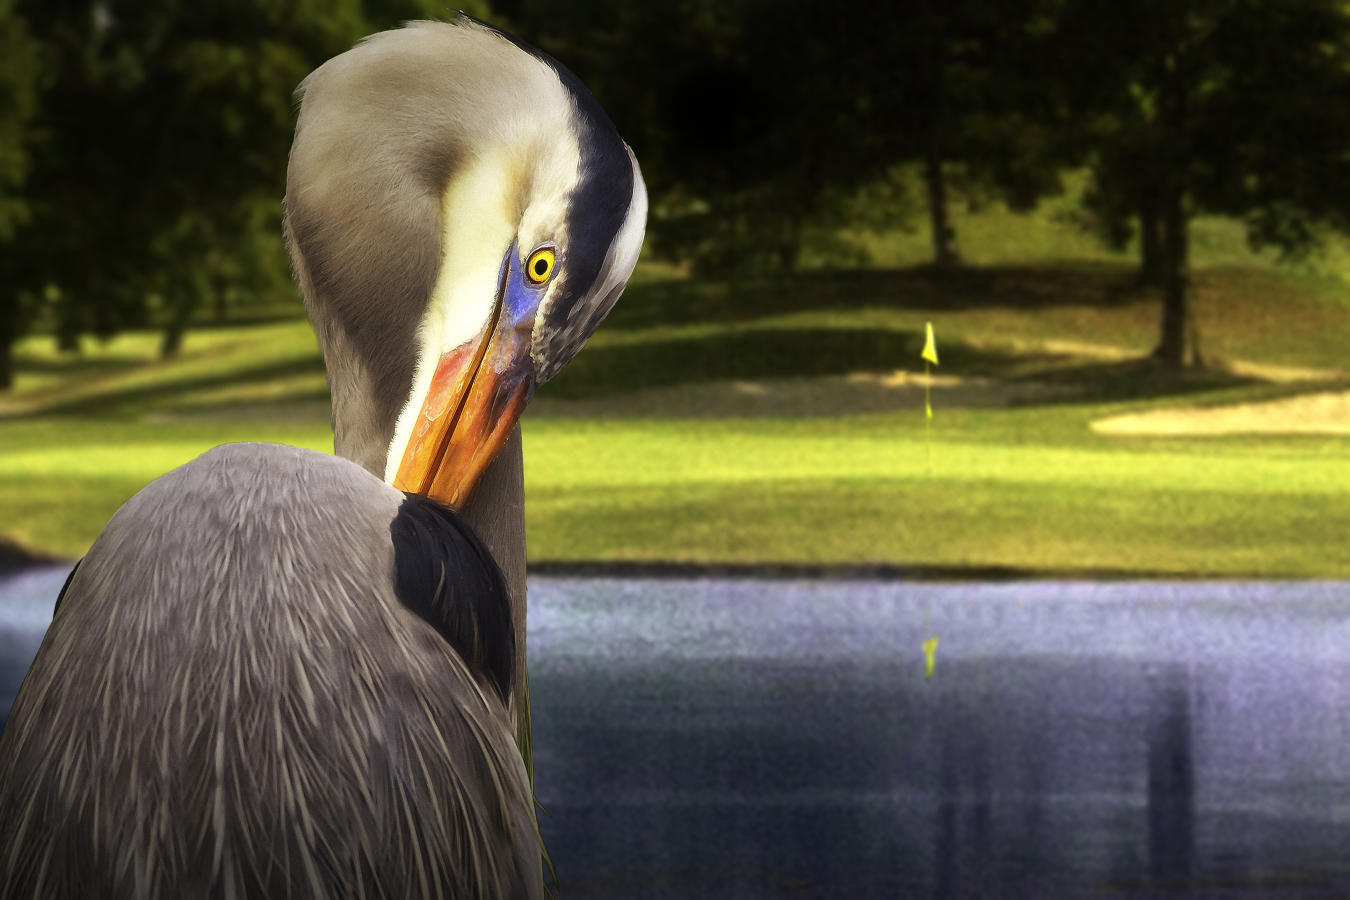 <span style="font-size:16px;">Nashville Golf 10th Hole with Heron</span> : Golf Landscapes : nick dantona fine art photography